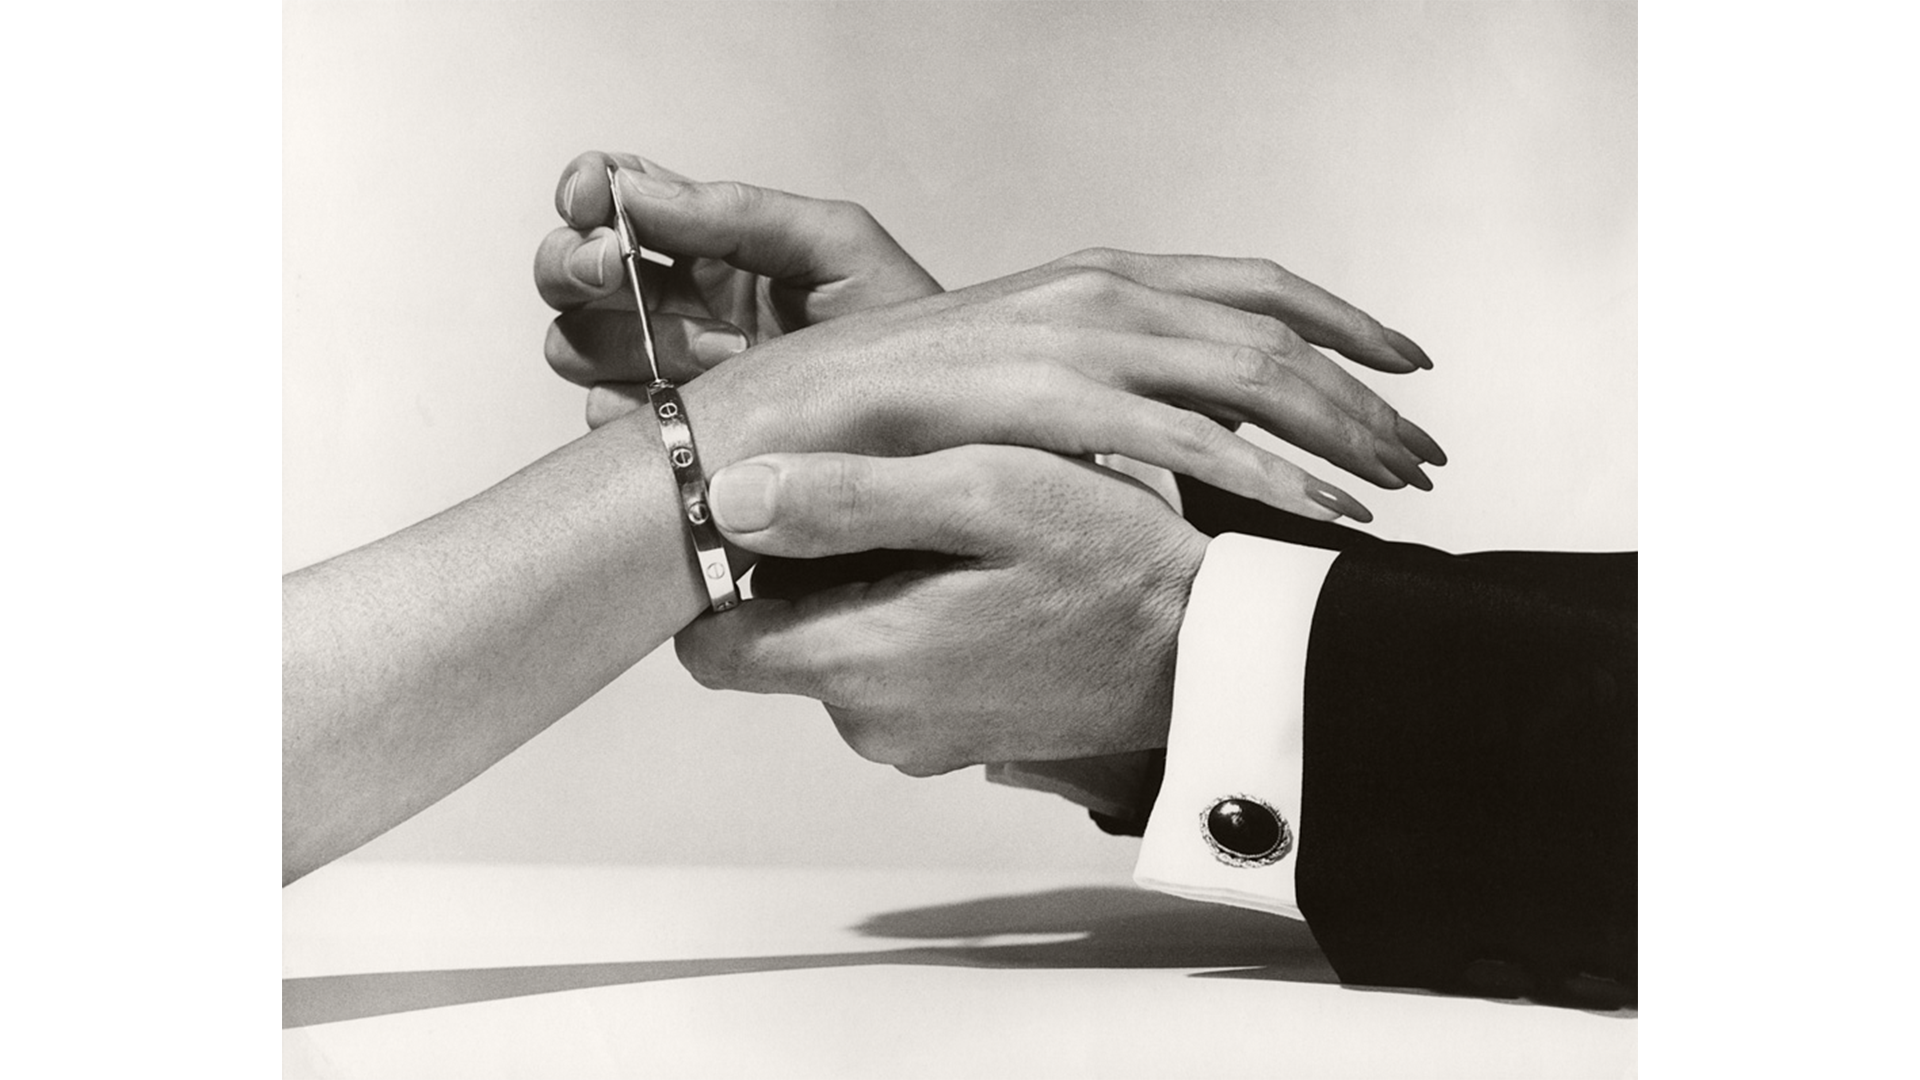 Love Bracelet by Aldo Cipullo, photograph by Gary Bernstein, at the Museum of Modern Art, New York City.